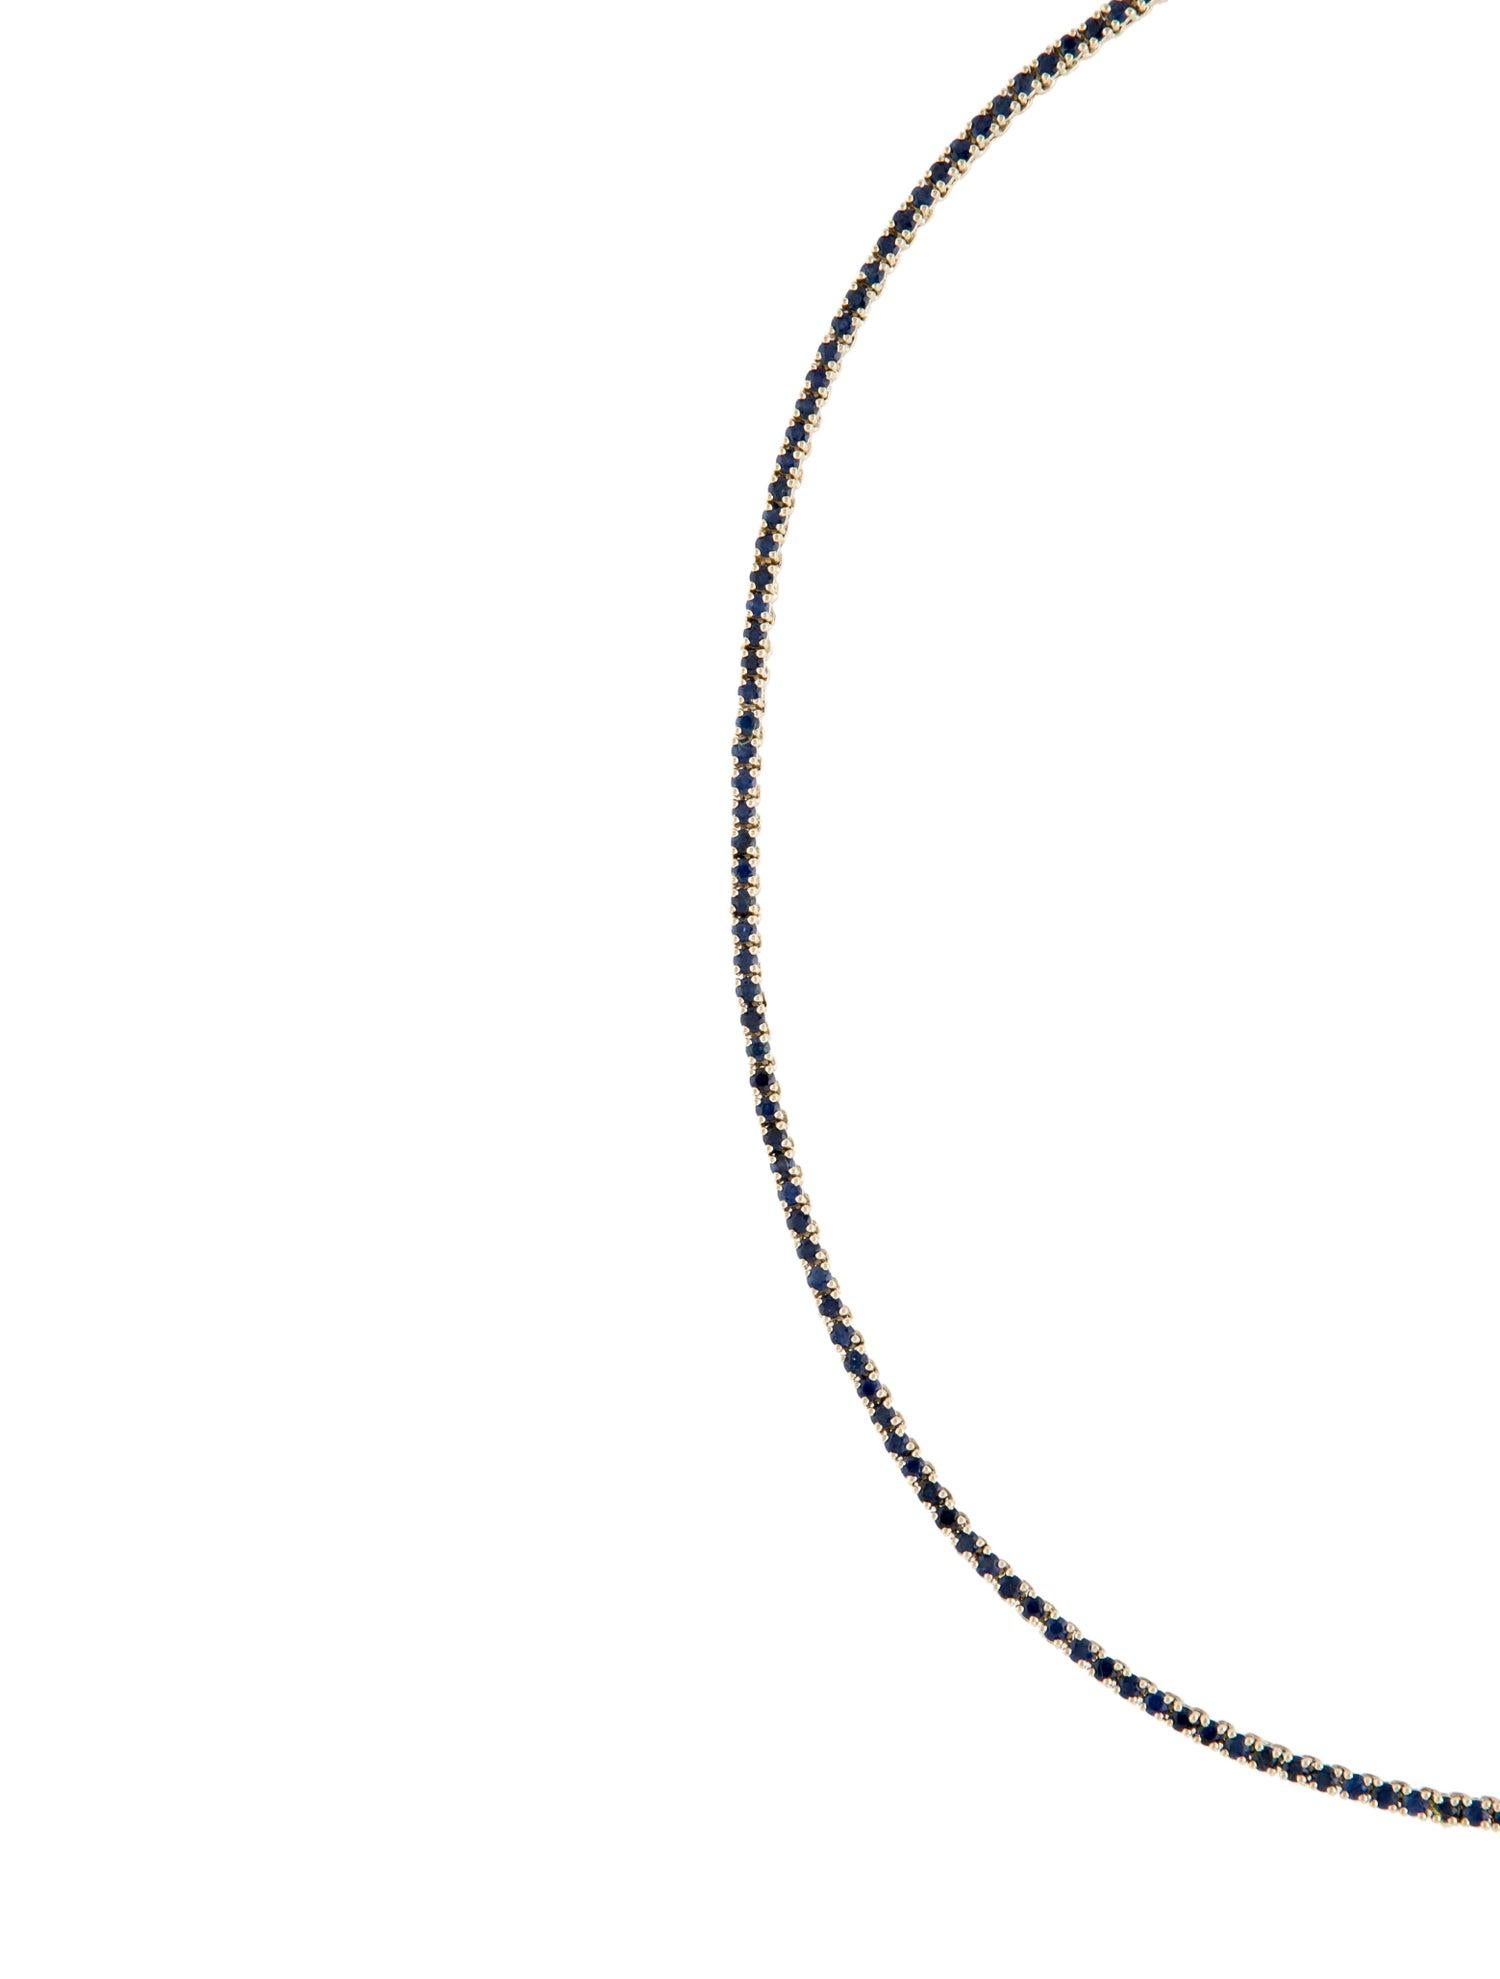 Brilliant Cut Exquisite 14K Sapphire Chain Necklace - Elegant Gemstone Statement Jewelry For Sale